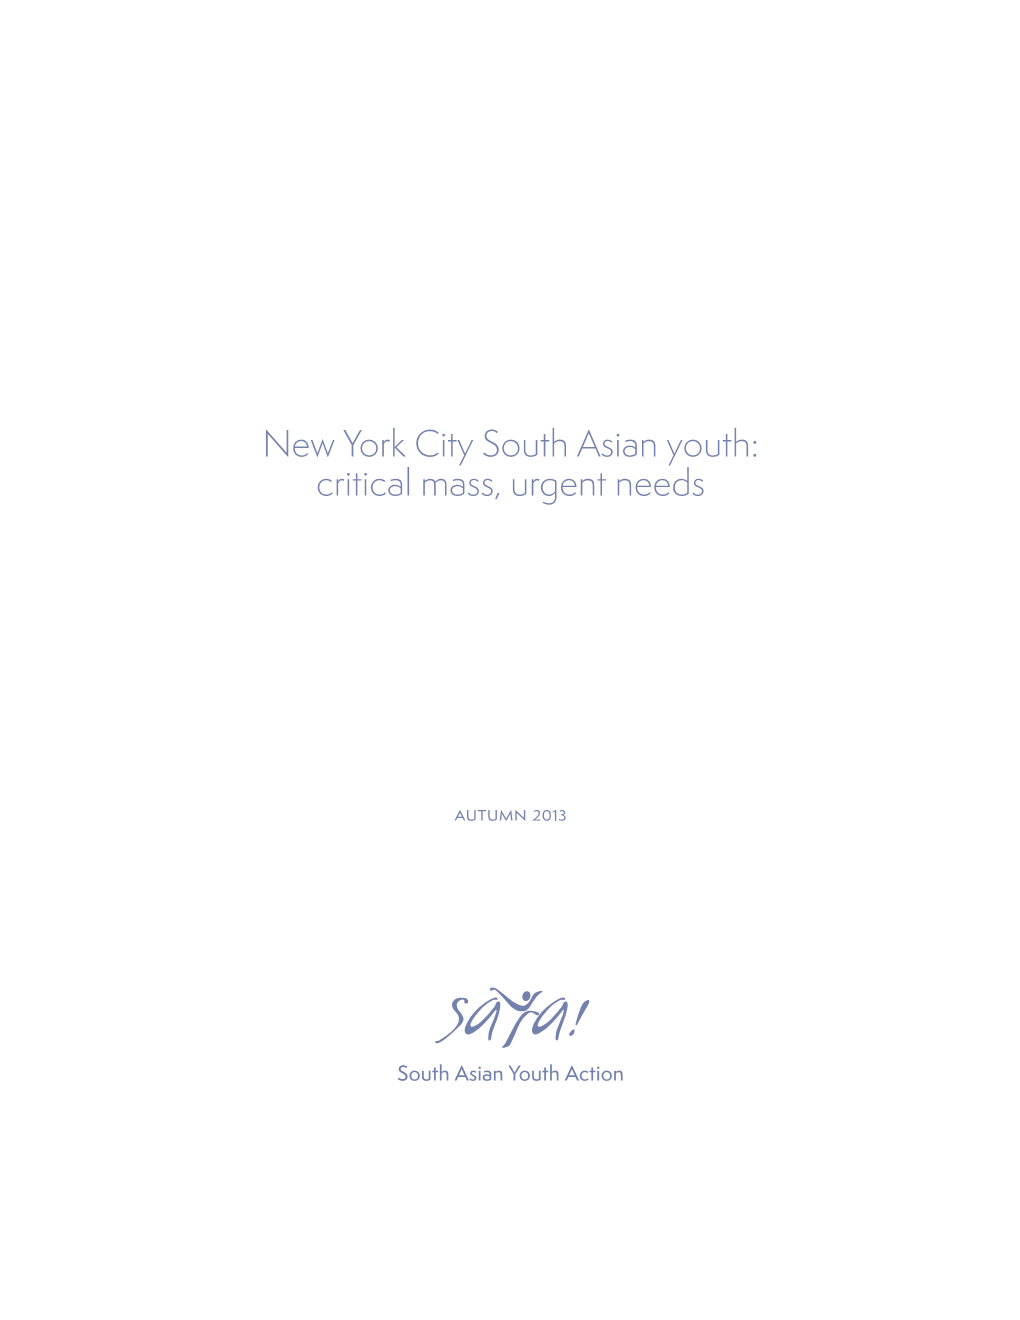 New York City South Asian Youth: Critical Mass, Urgent Needs